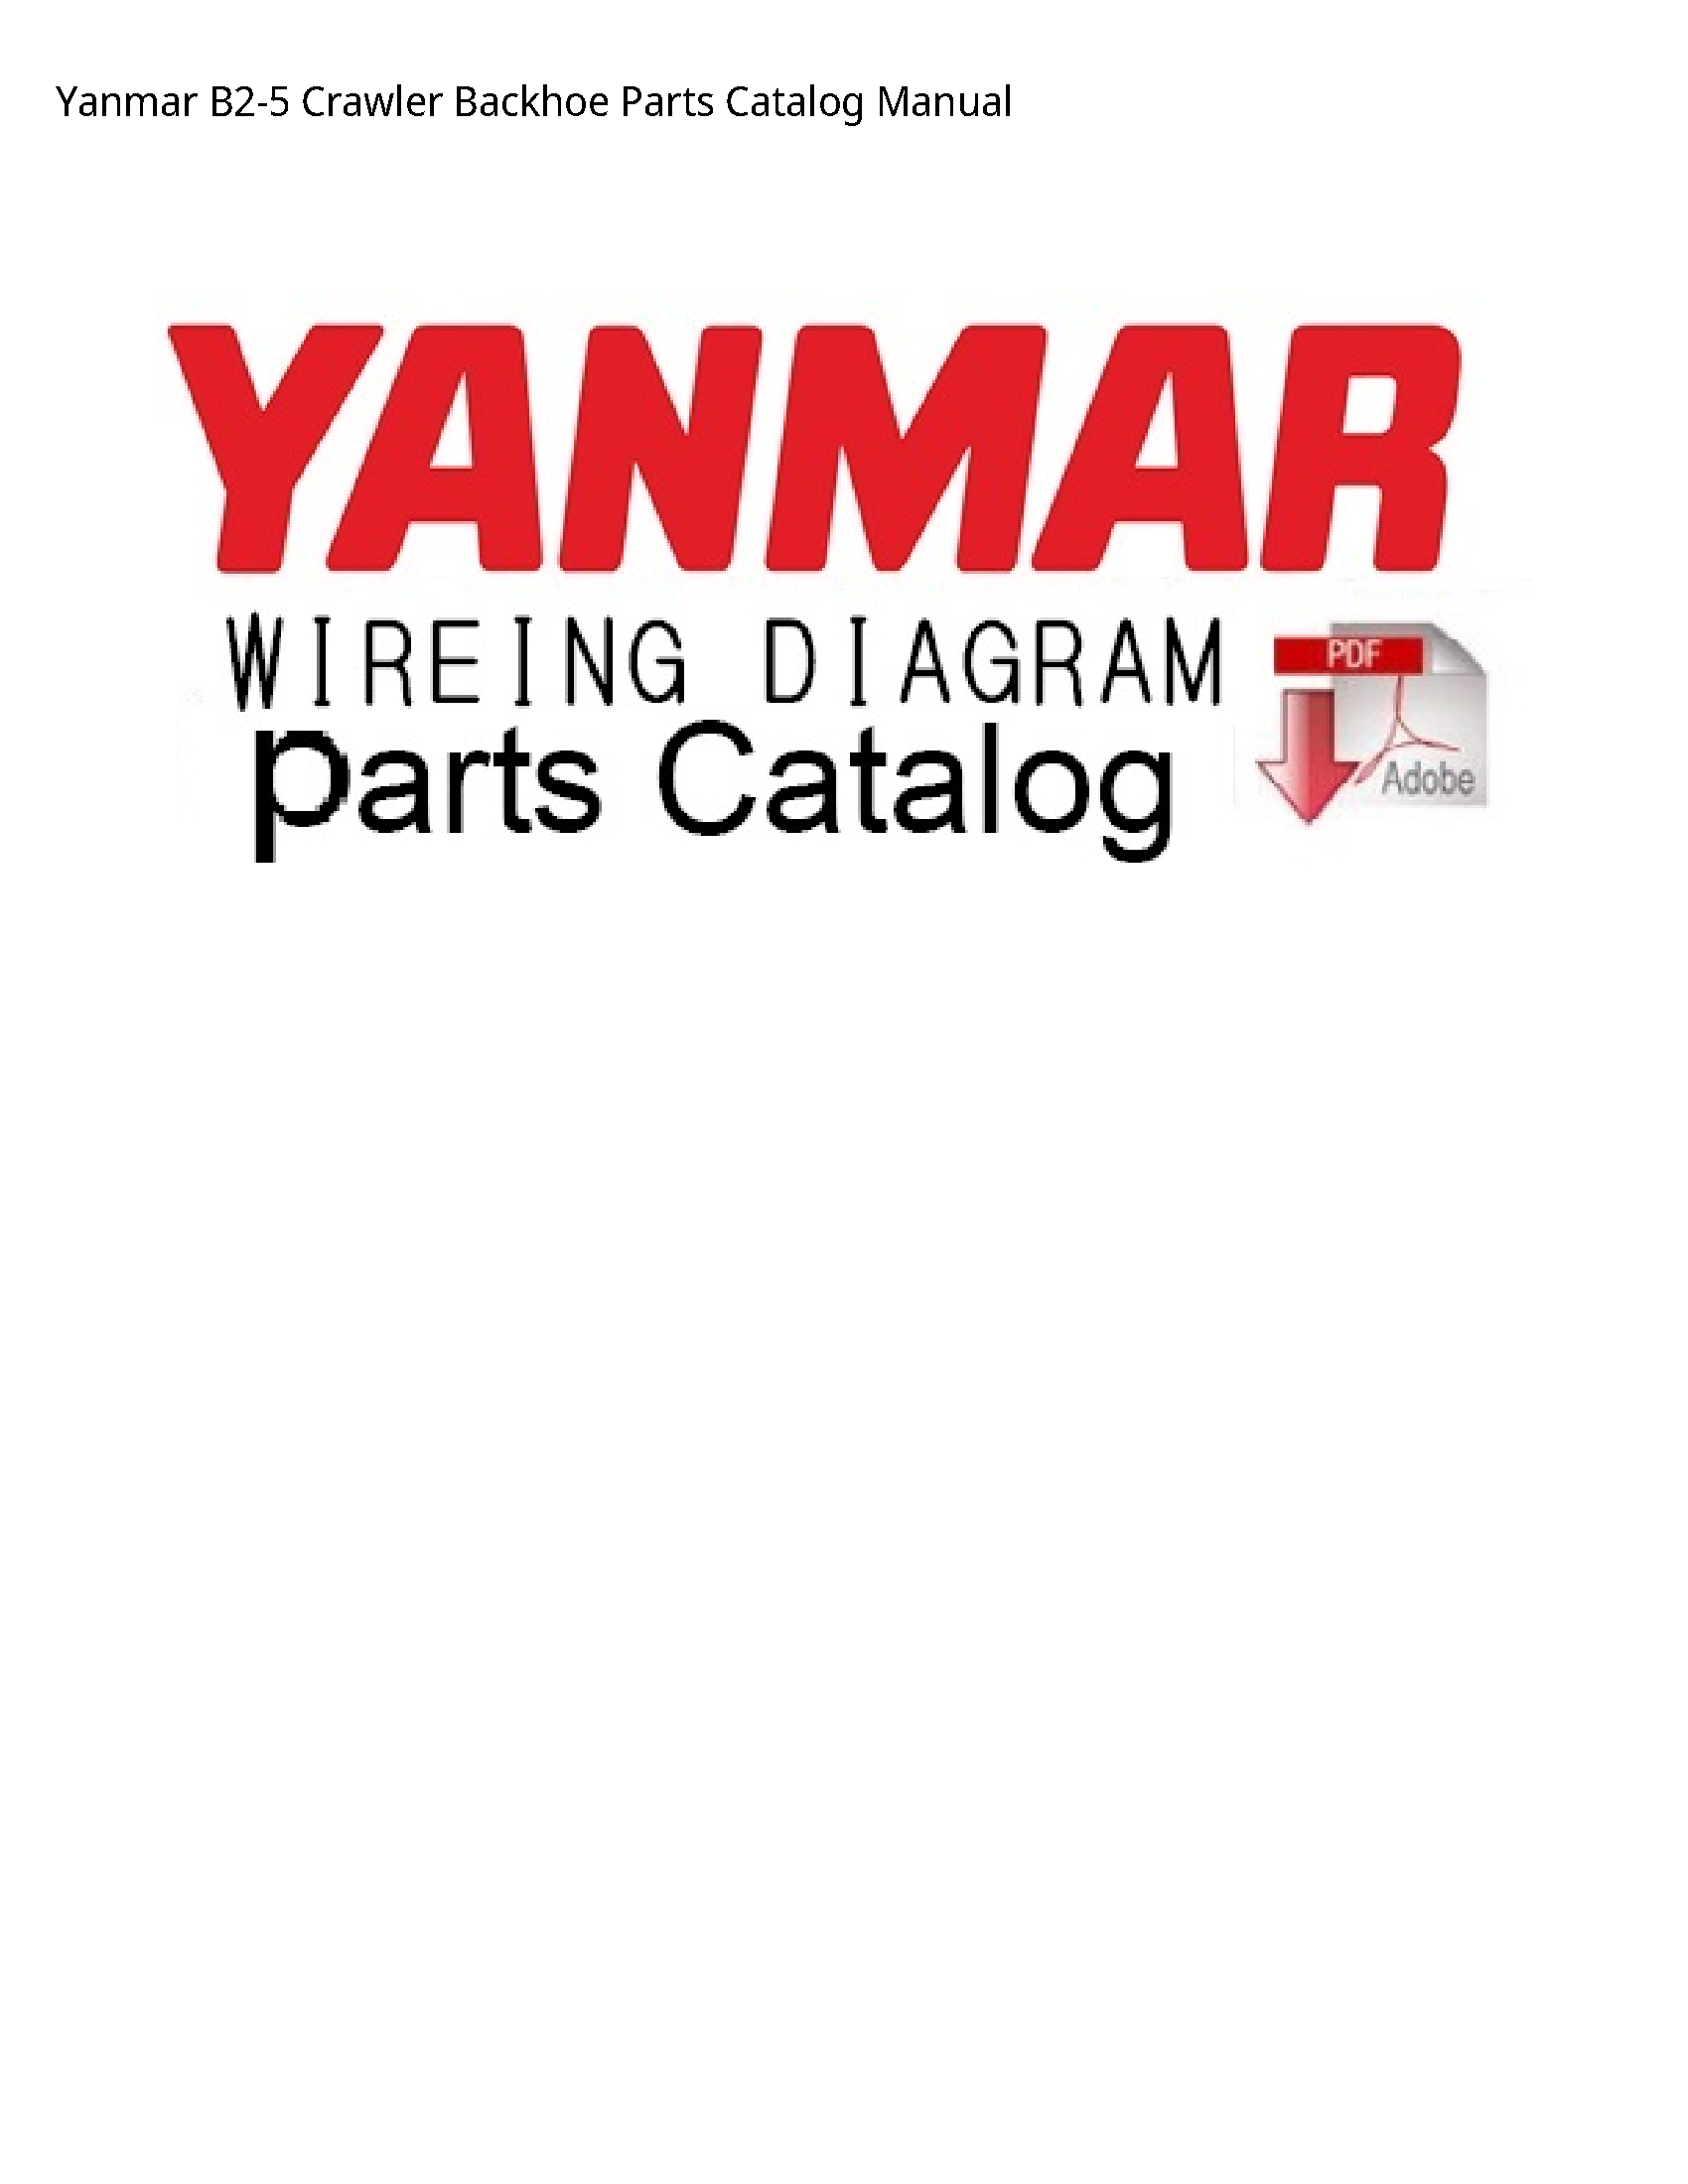 Yanmar B2-5 Crawler Backhoe Parts Catalog manual